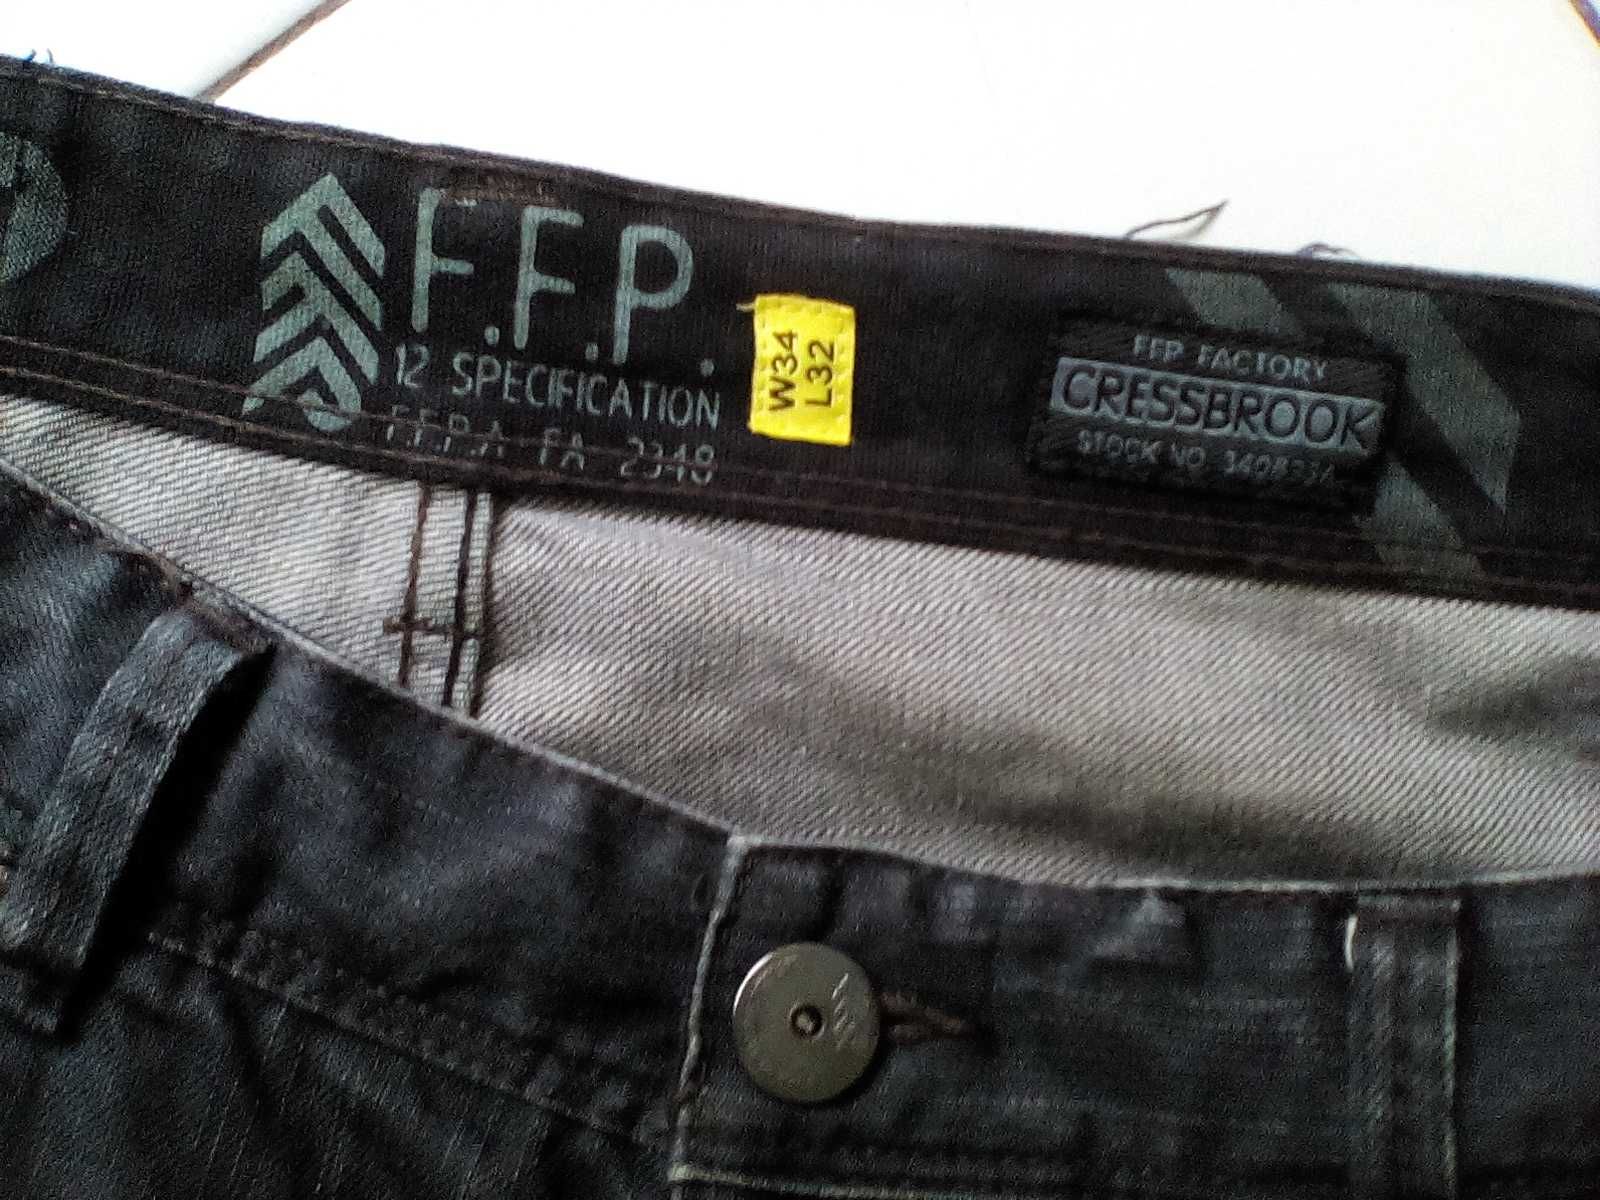 Męskie dżinsy FFP Factory Cressbrook, rozmiar: 34/32